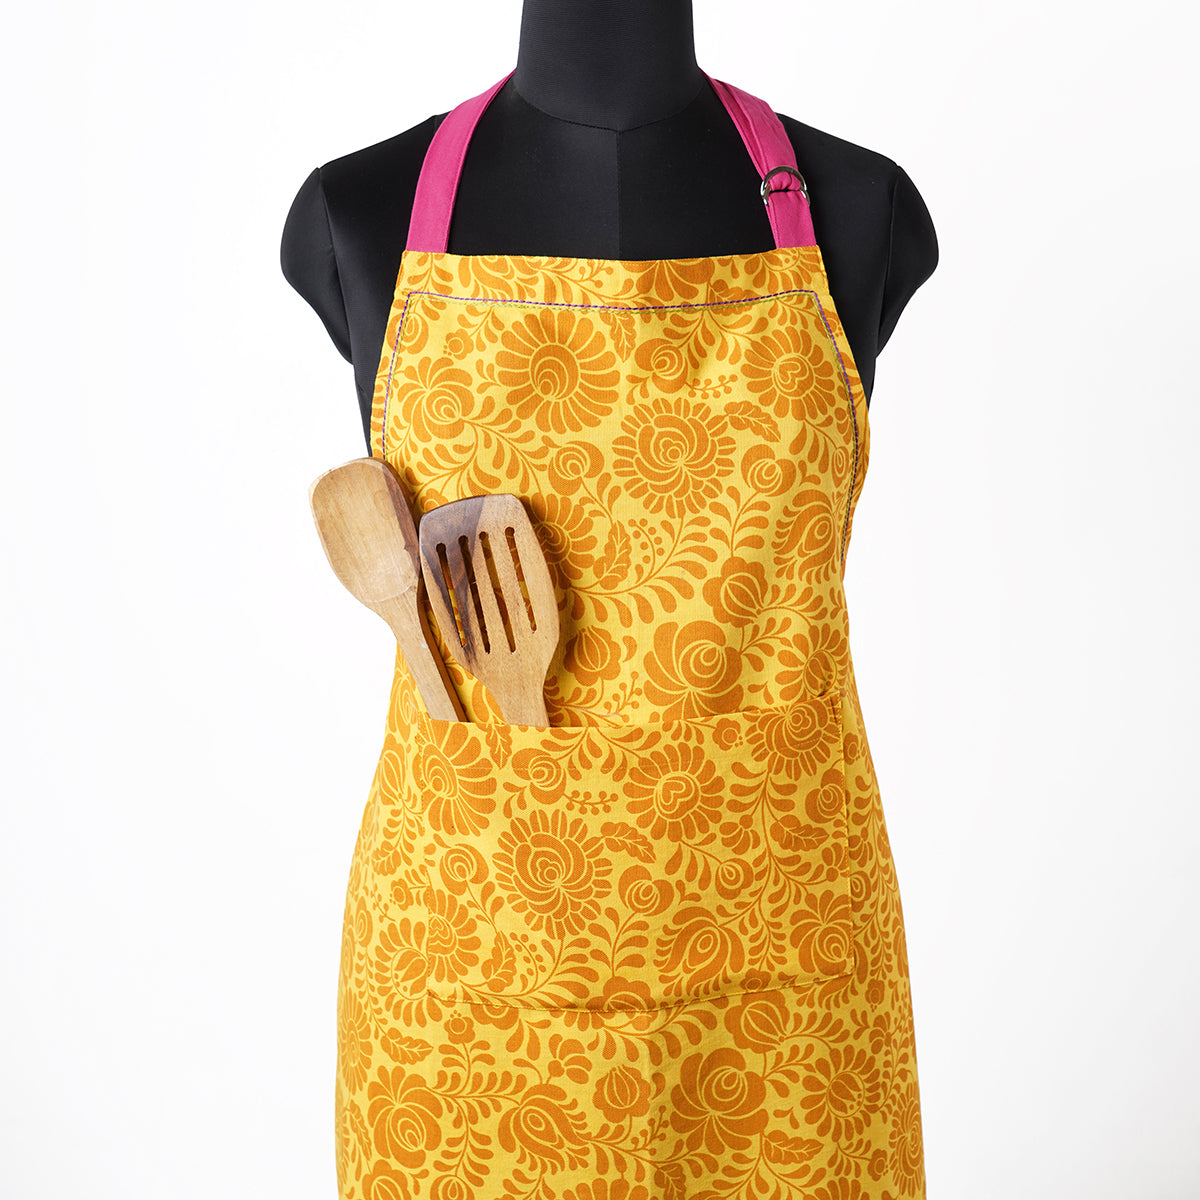 Matyo Yellow color apron, floral print, kitchen accessory, 100% cotton, size 27"X 35"